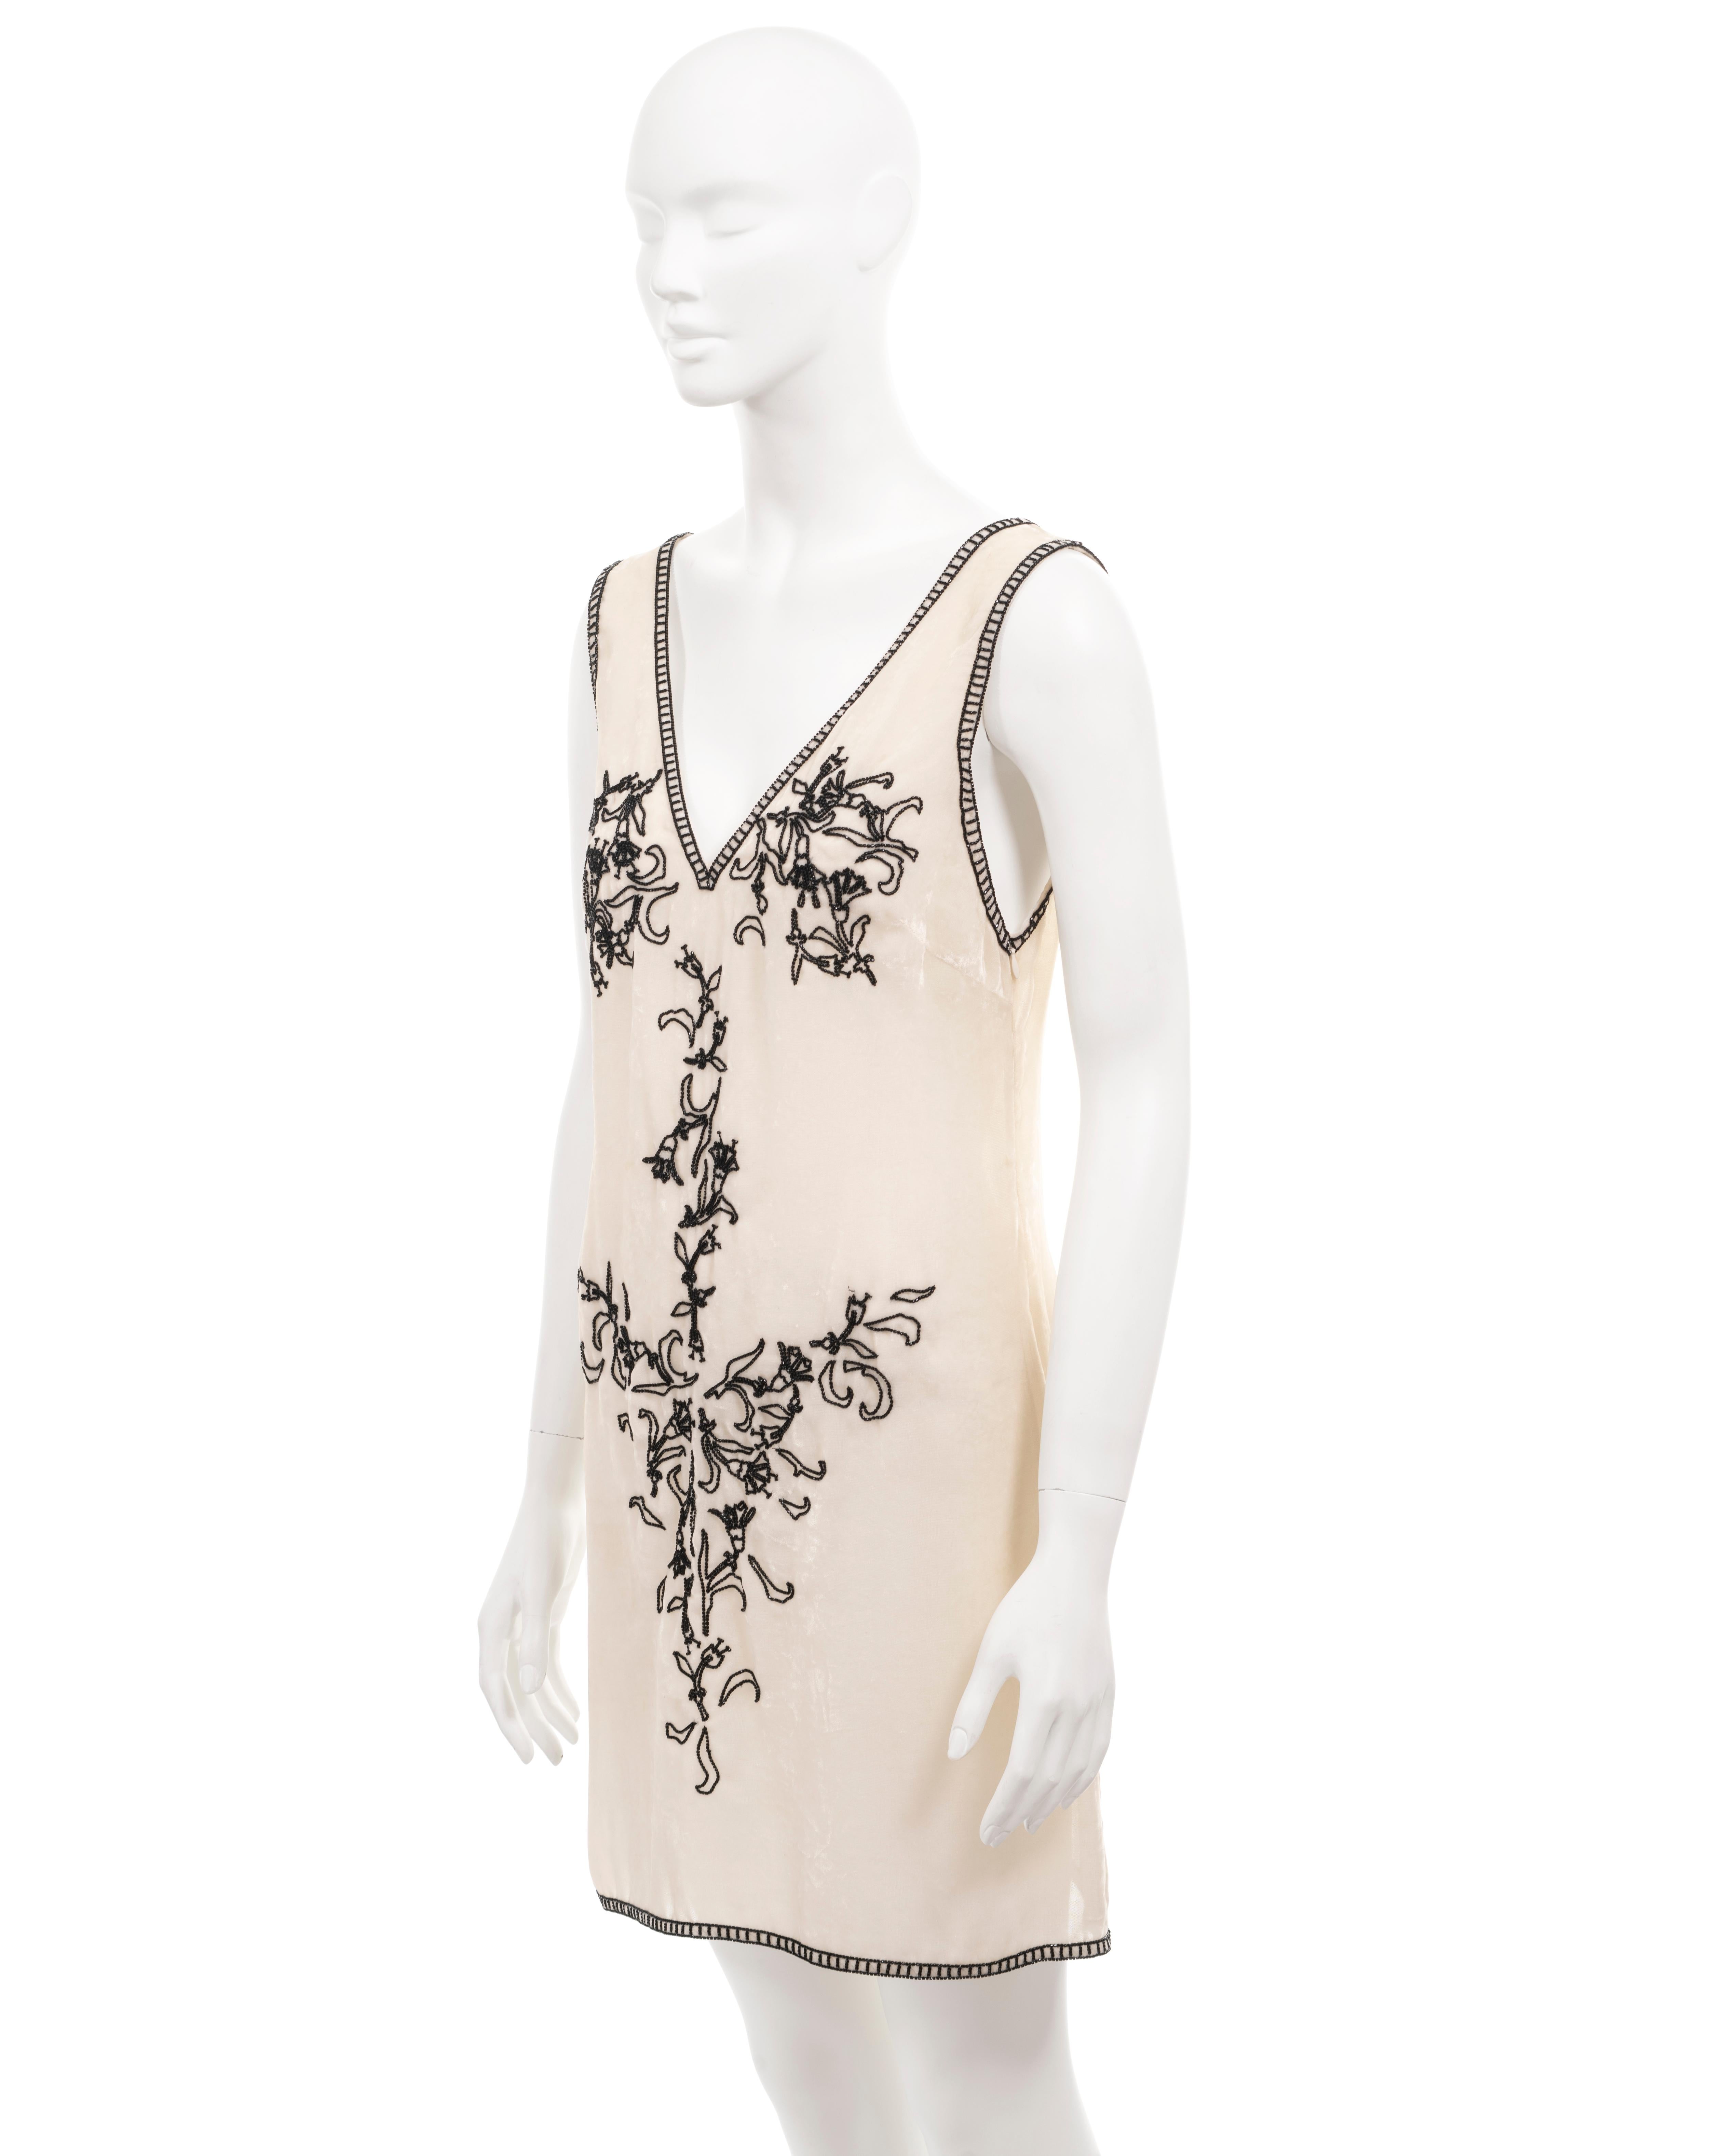 Prada by Miuccia Prada ivory velvet shift dress with beaded motif, fw 1997 10